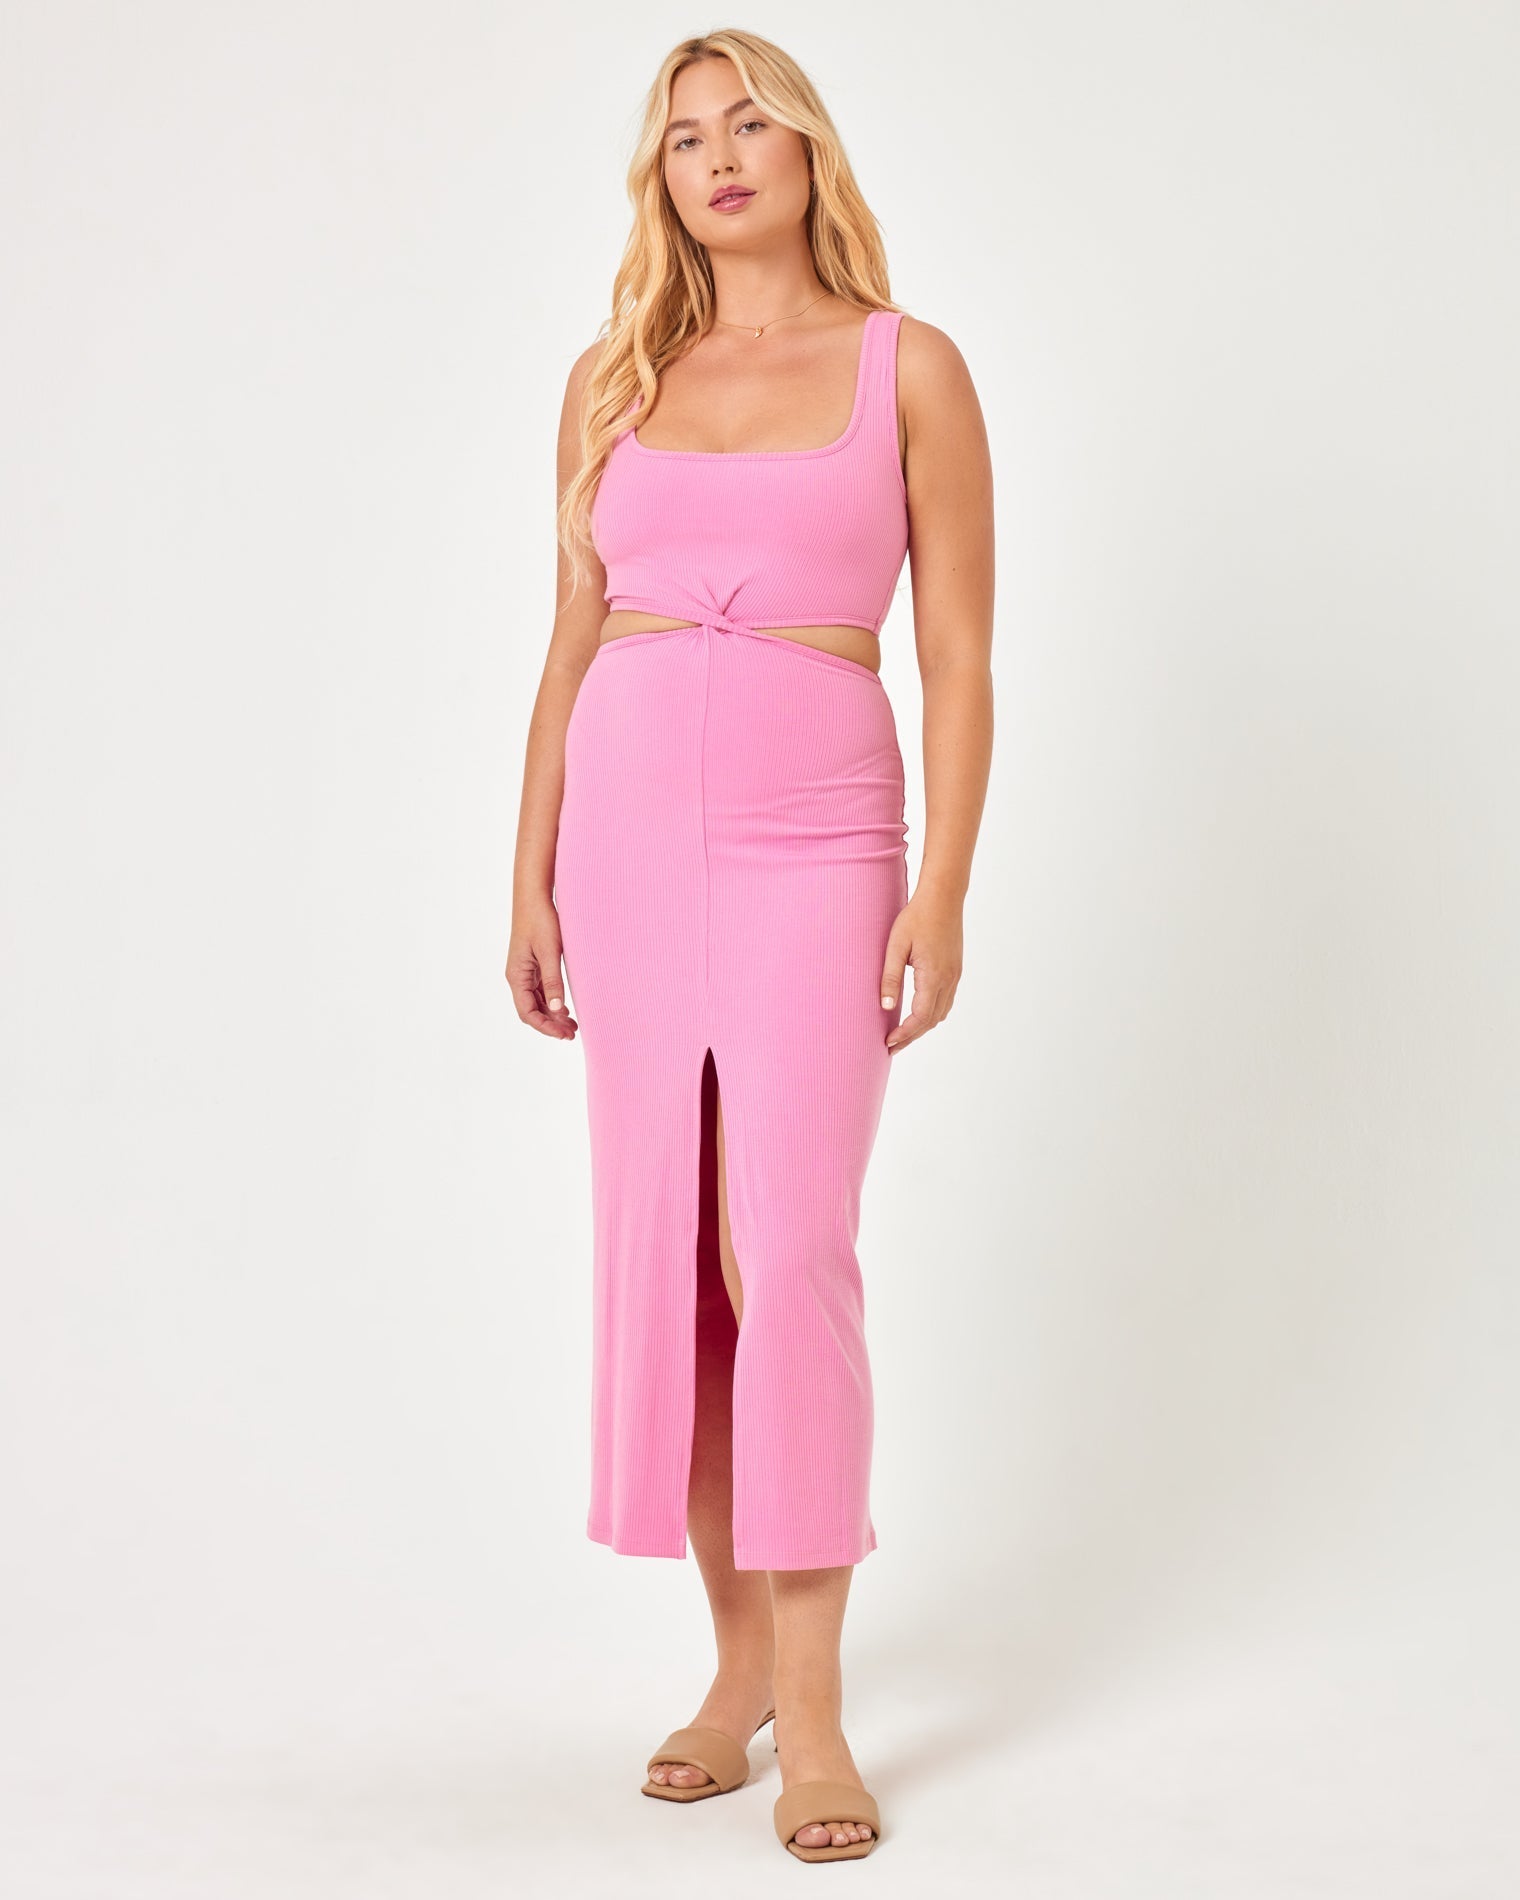 Skyler Dress - Guava Guava | Model: Sydney (size: XL)